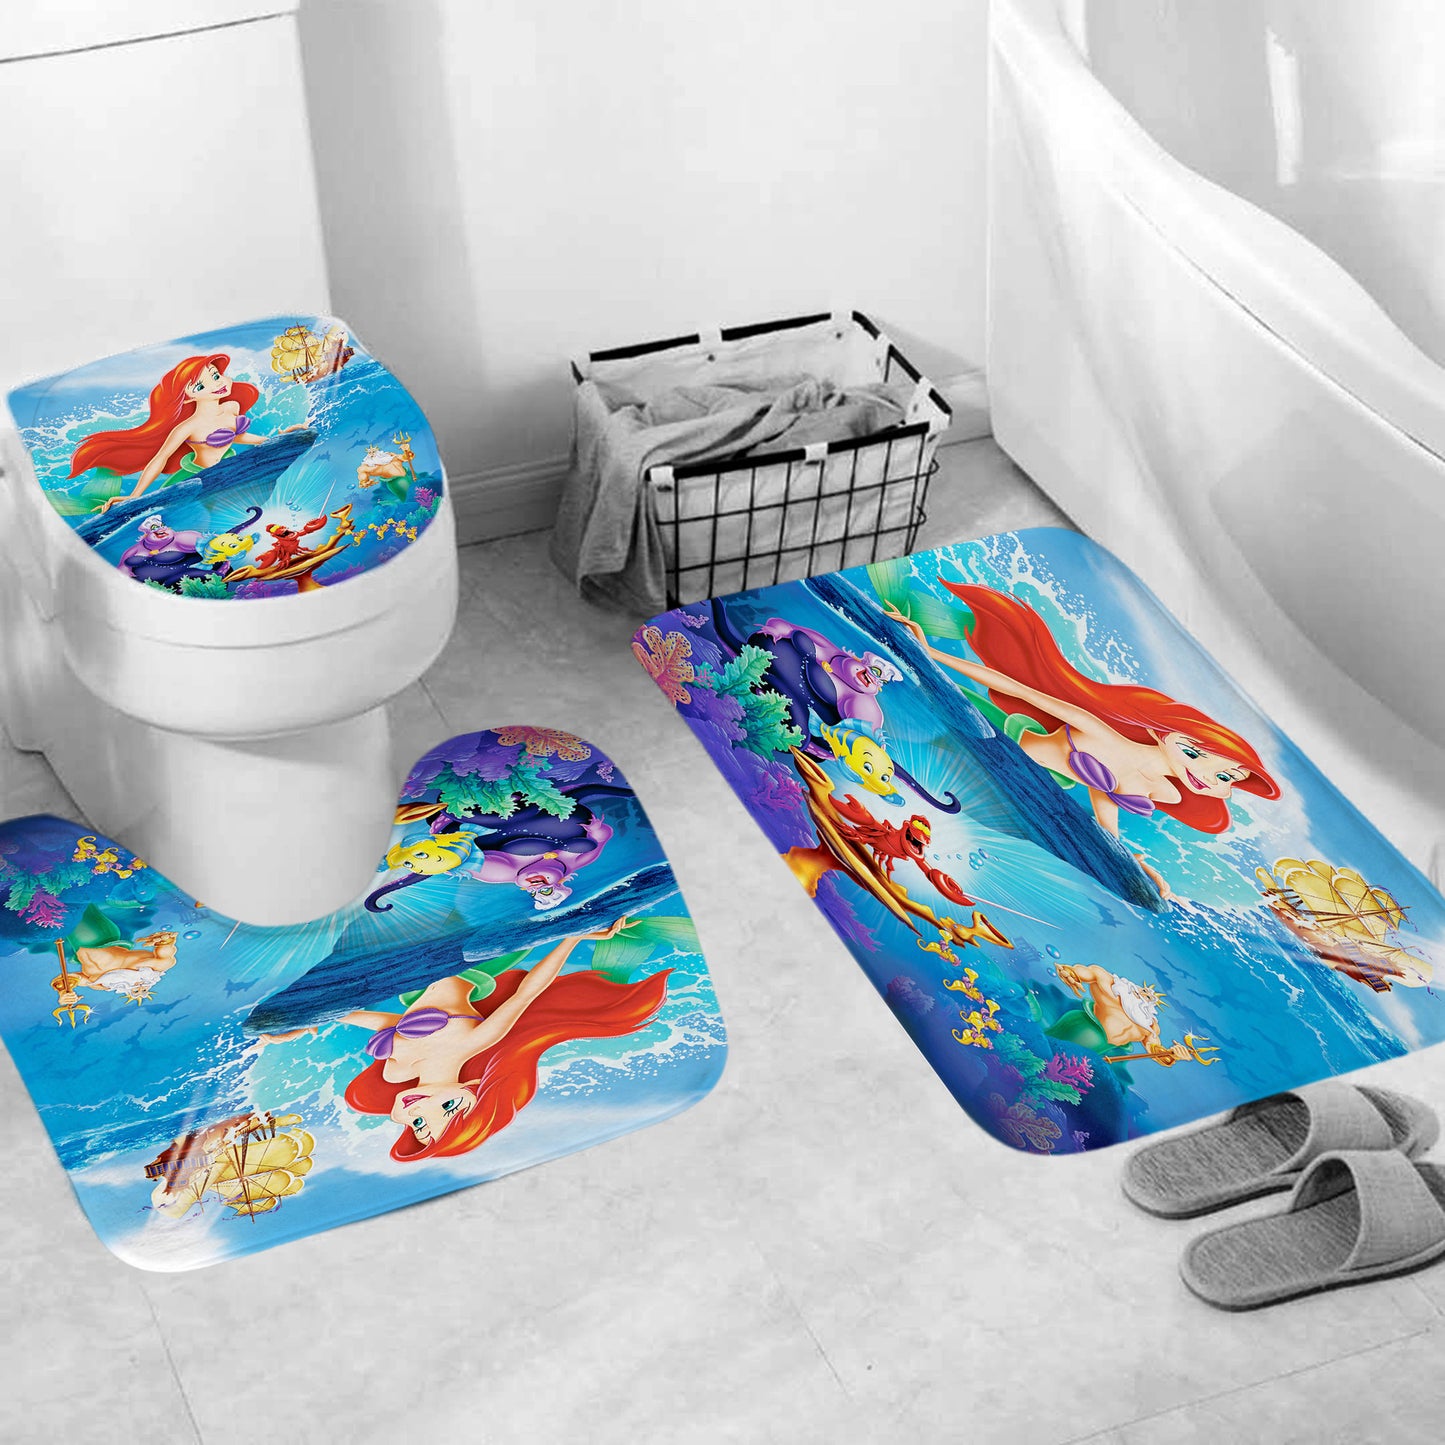 Cartoon Mermaid Ariel Bathroom Set - 4 Pcs